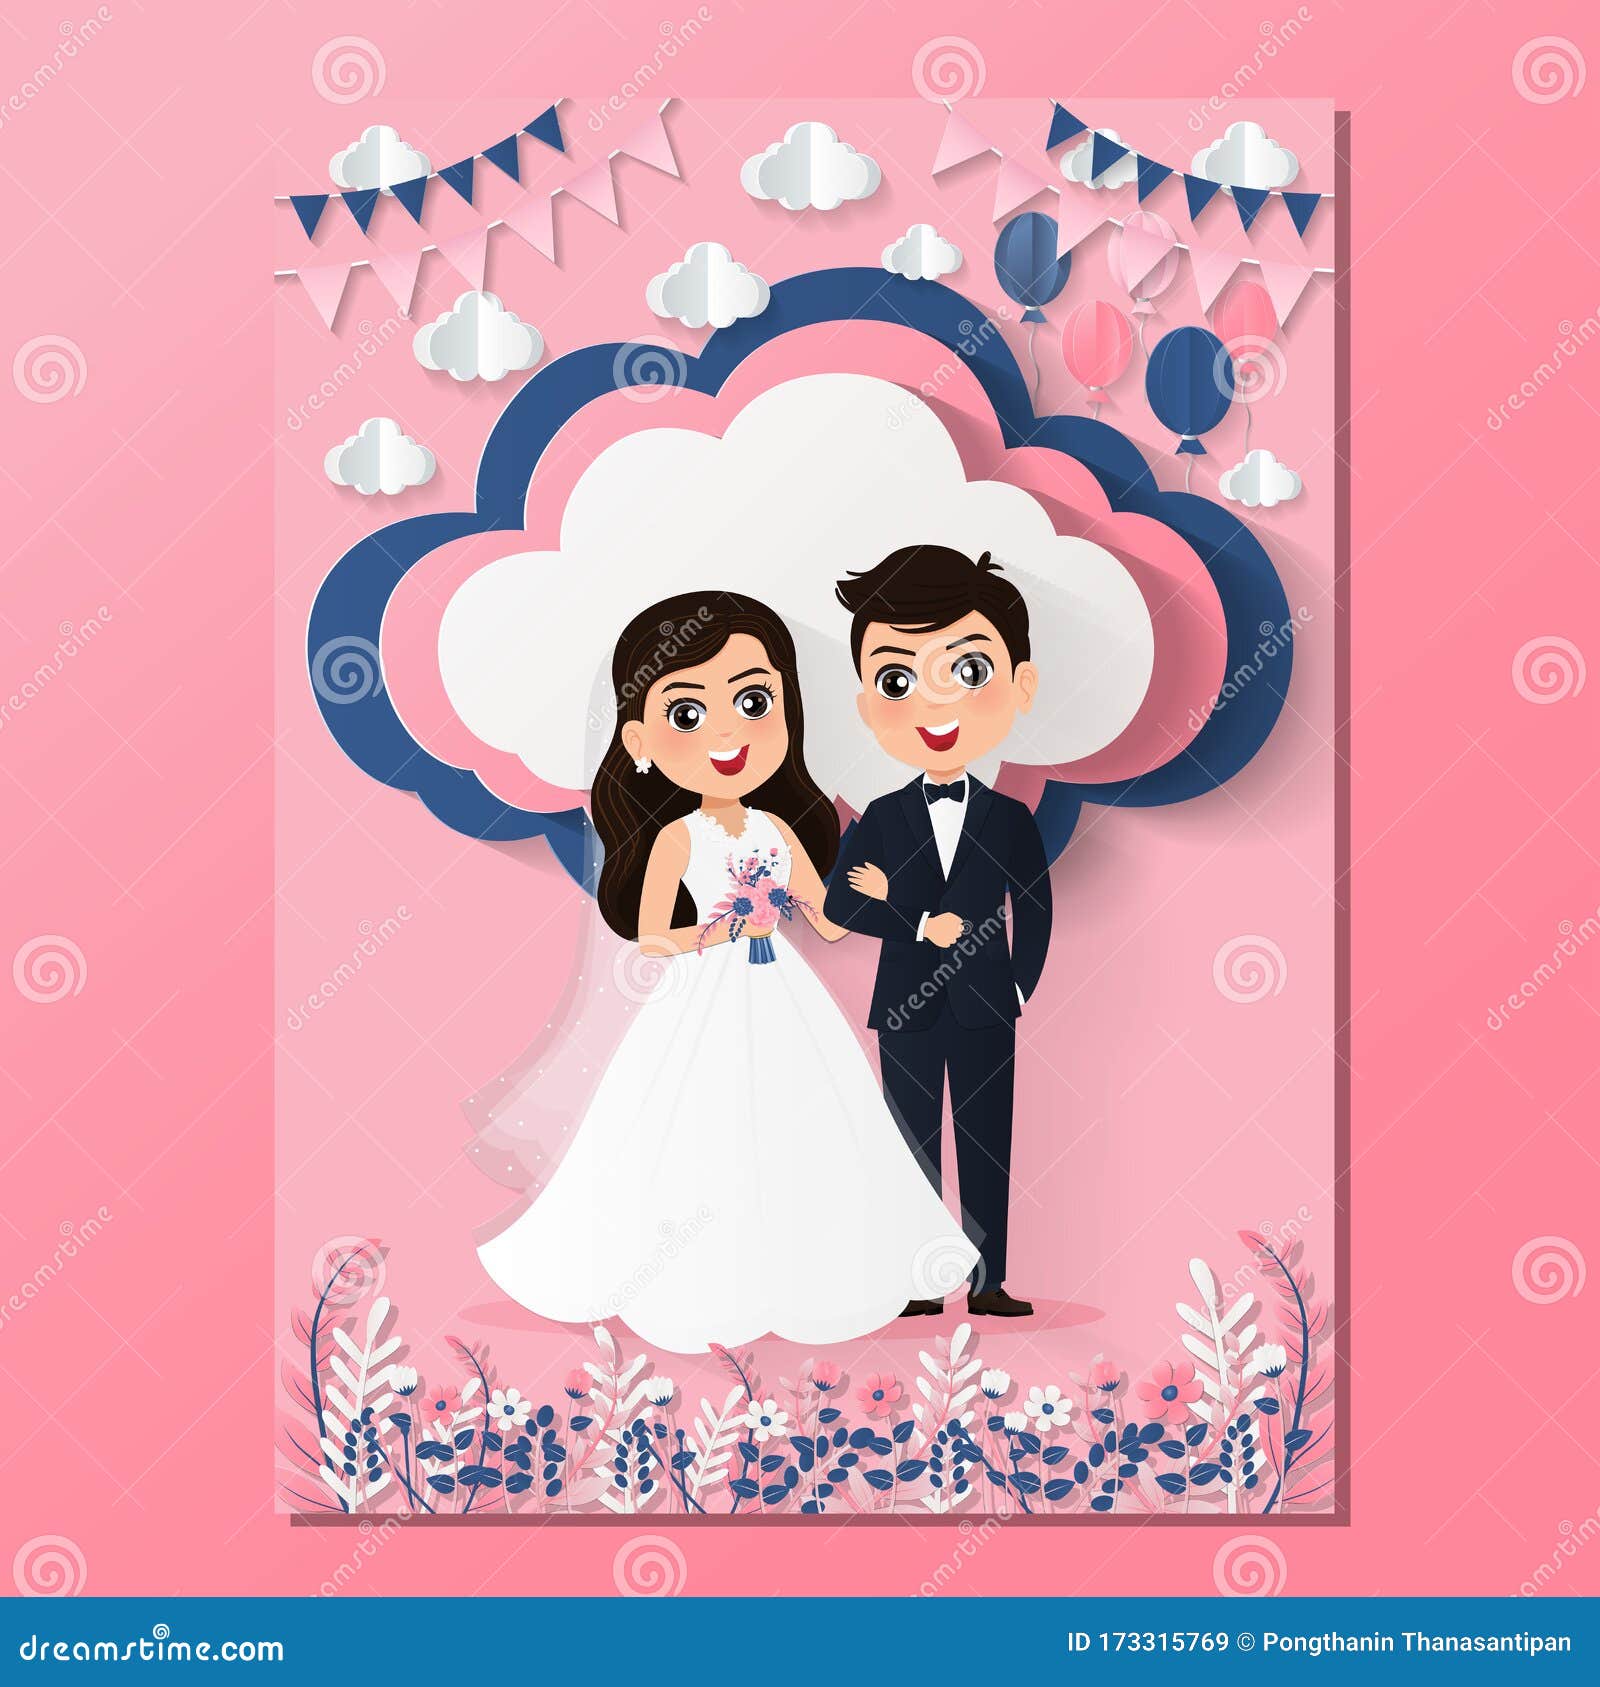 Wedding Invitation Card the Bride and Groom Cute Couple Cartoon   Vector Illustration for Event Celebration Stock  Illustration - Illustration of creative, cartoon: 173315769